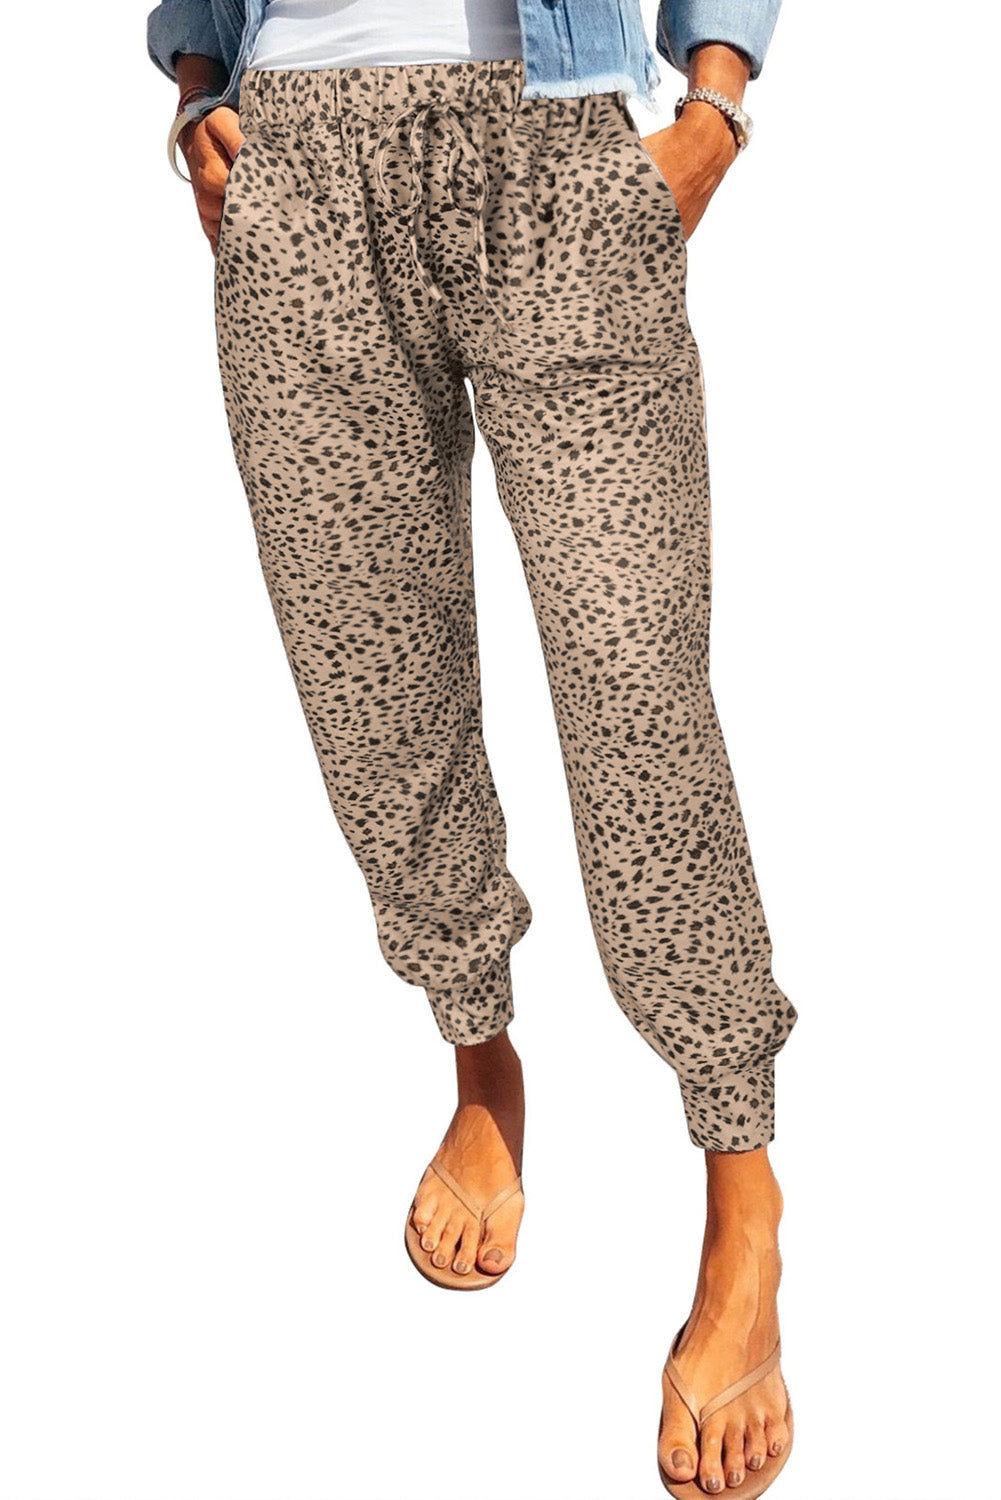 Leopard Pocketed Long Pants - Bottoms - Pants - 17 - 2024